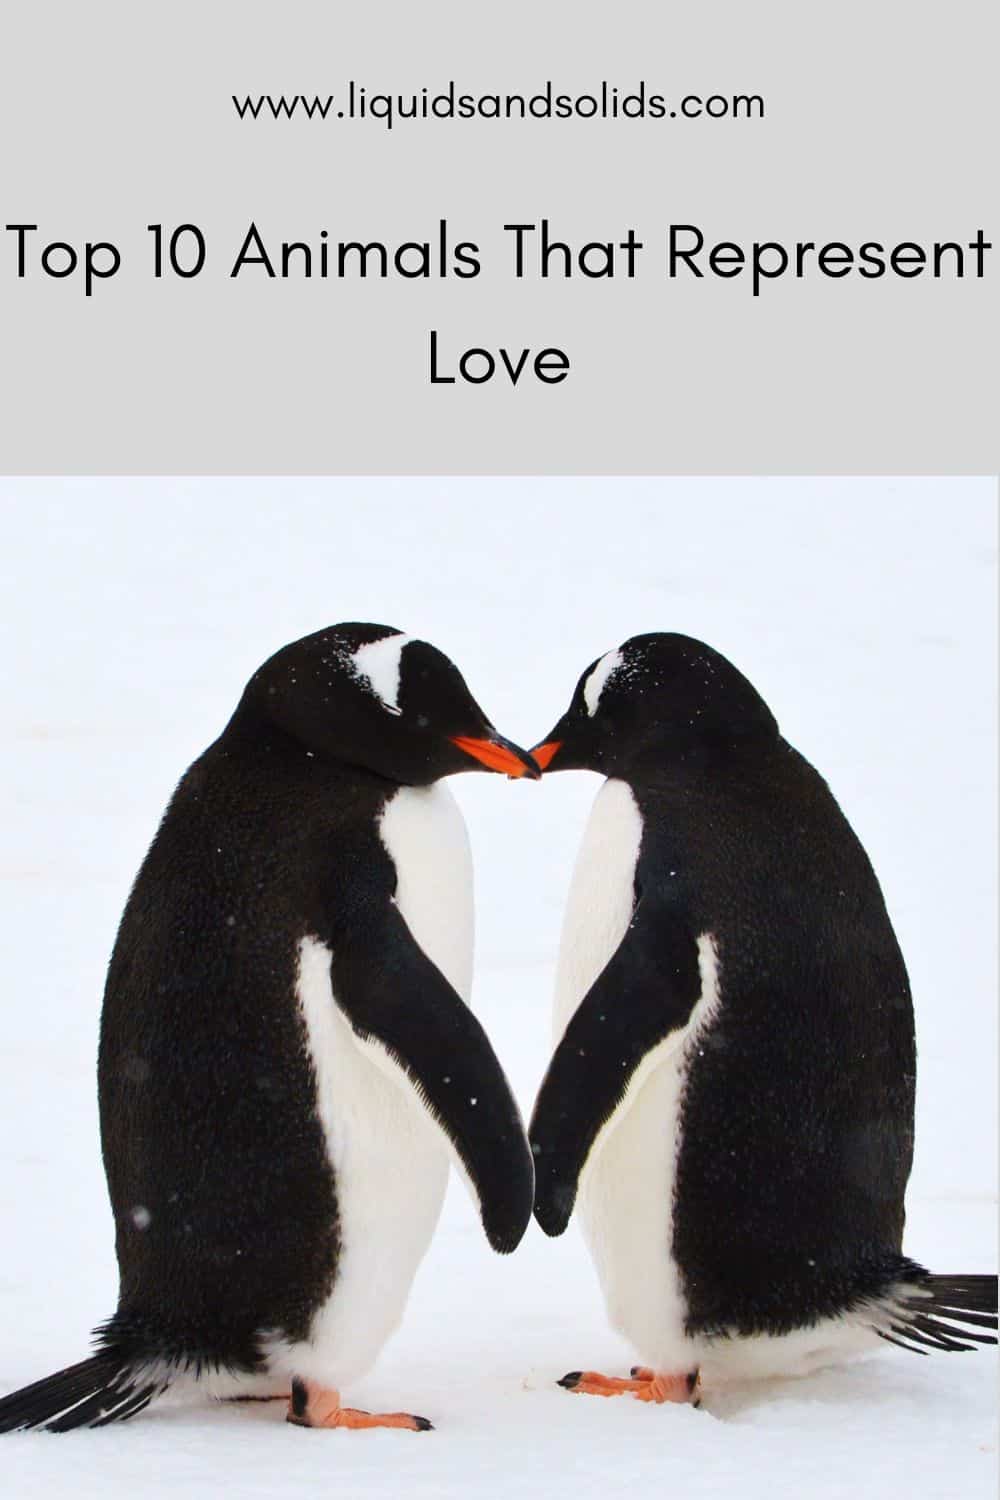 Top 10 Animals That Represent Love